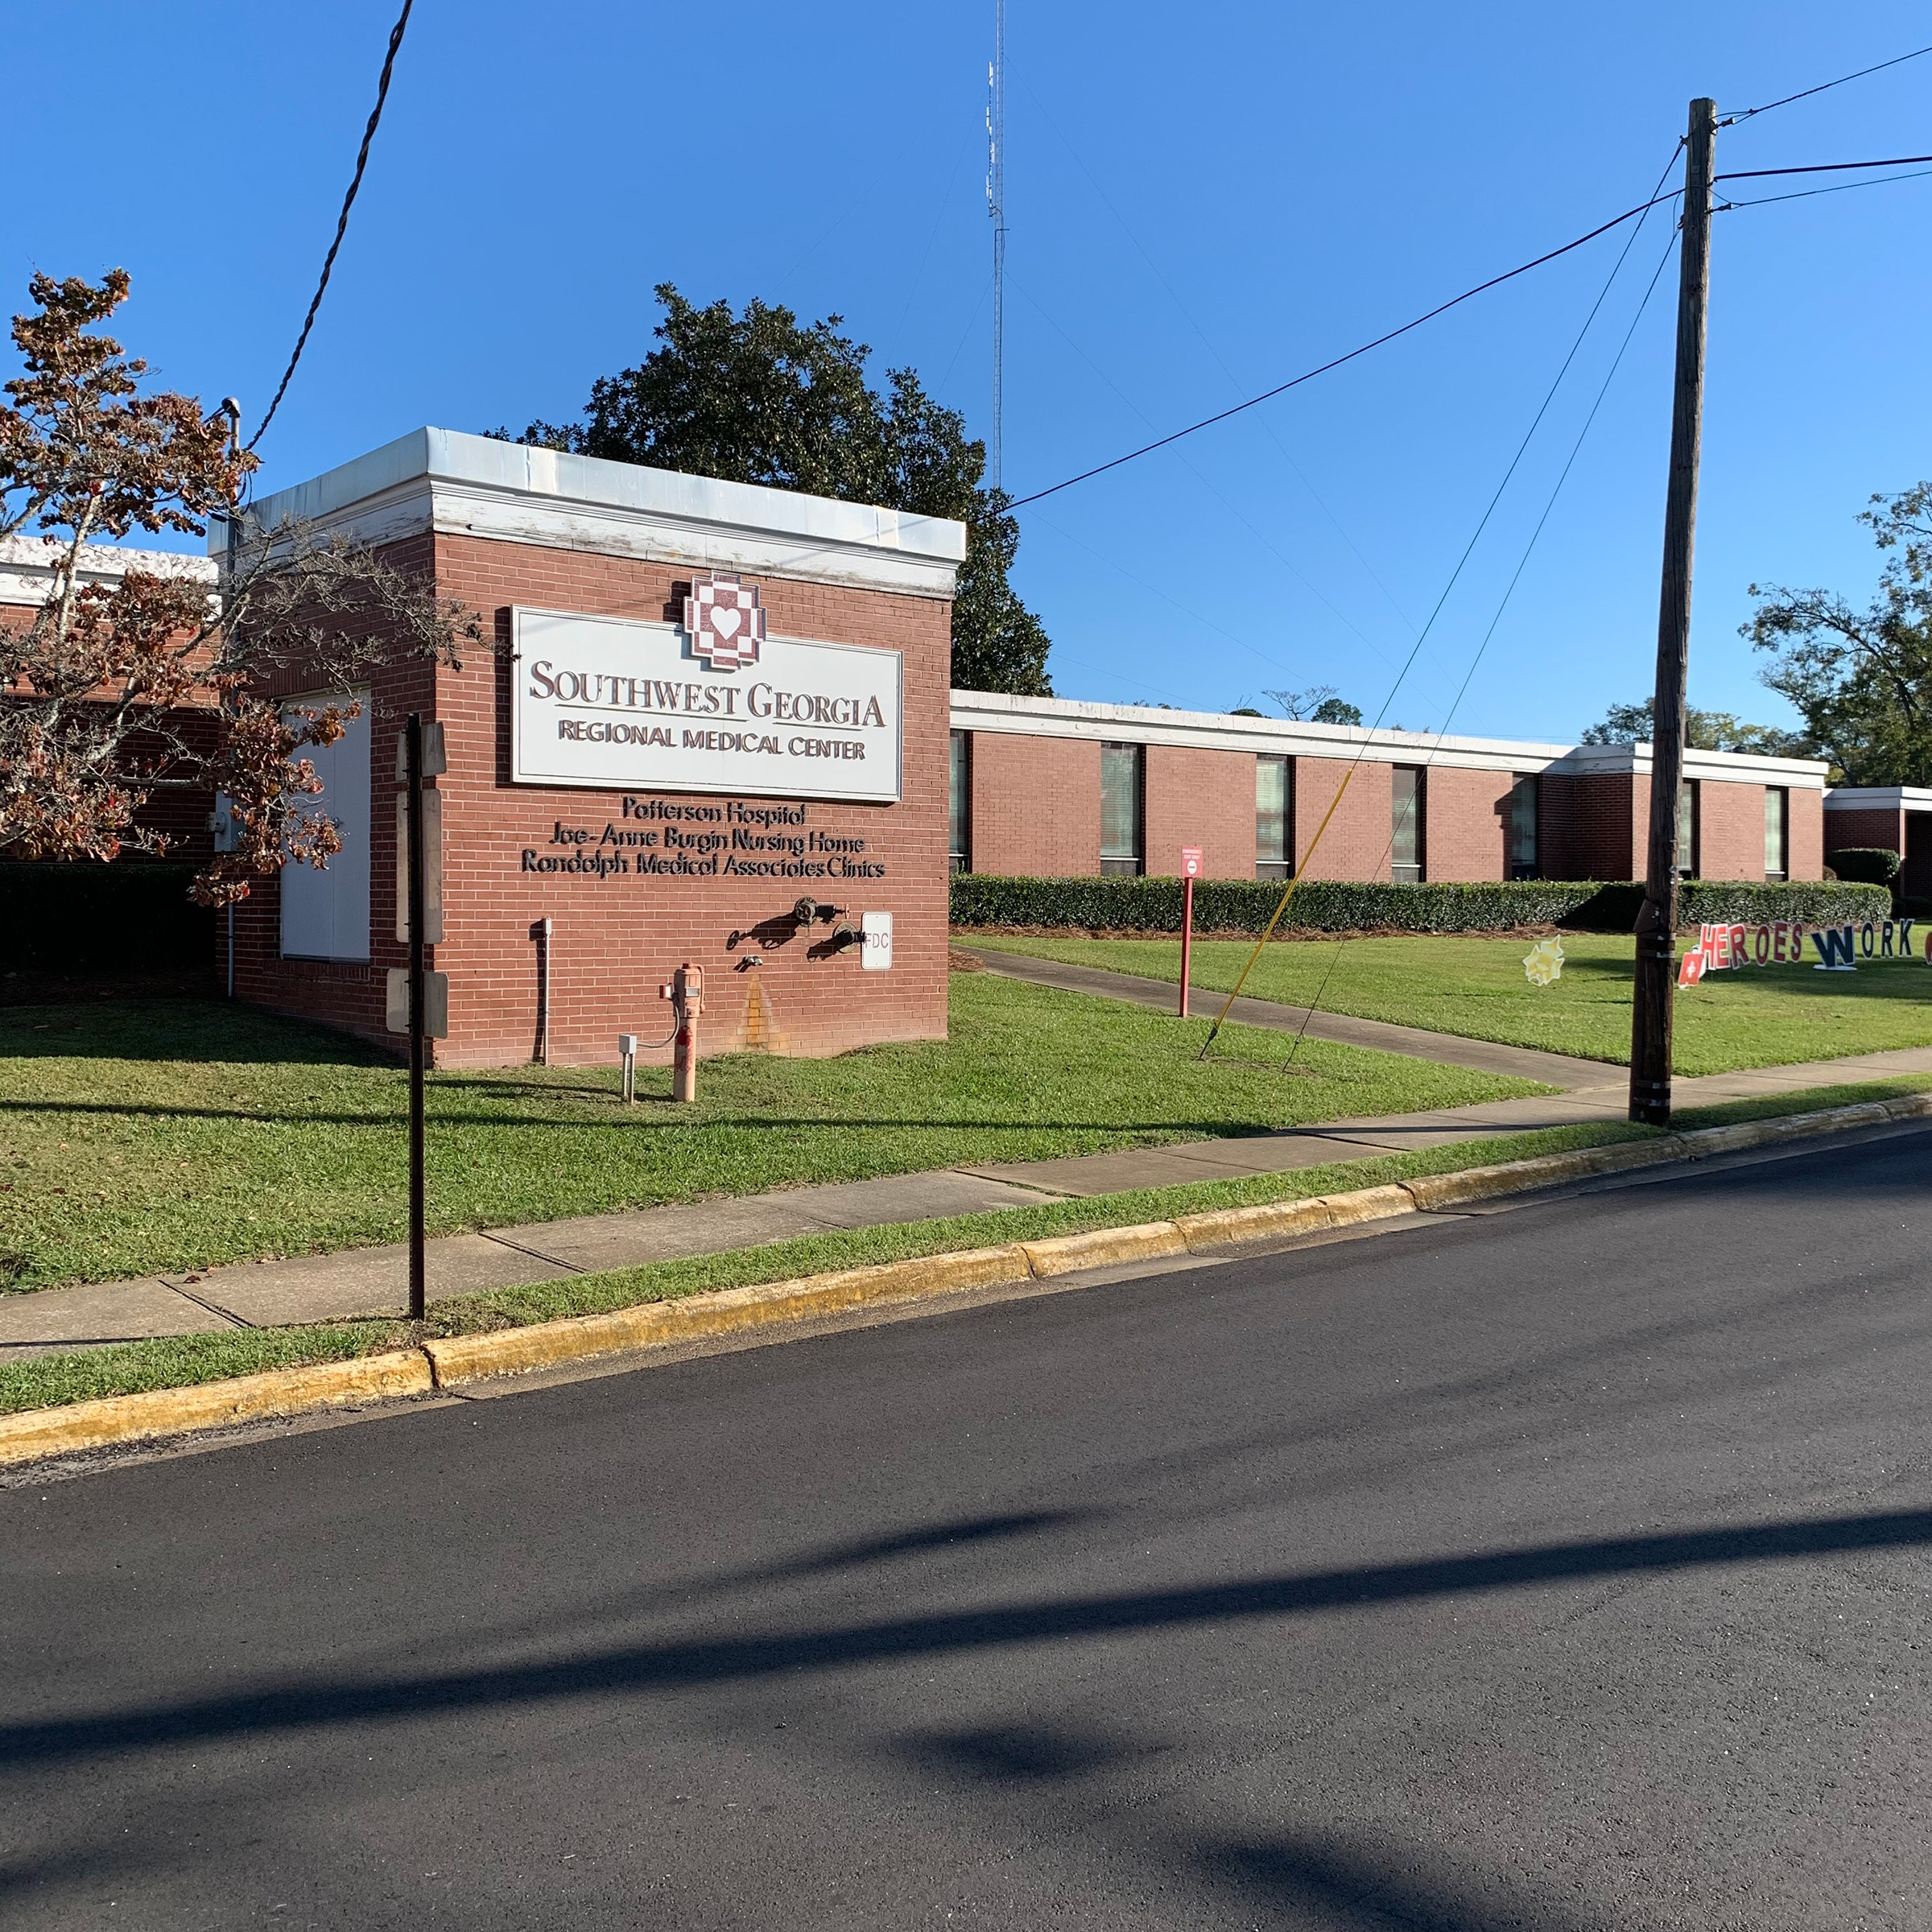 The exterior of Southwest Georgia Regional Medical Center (Courtesy Steve Whatley)